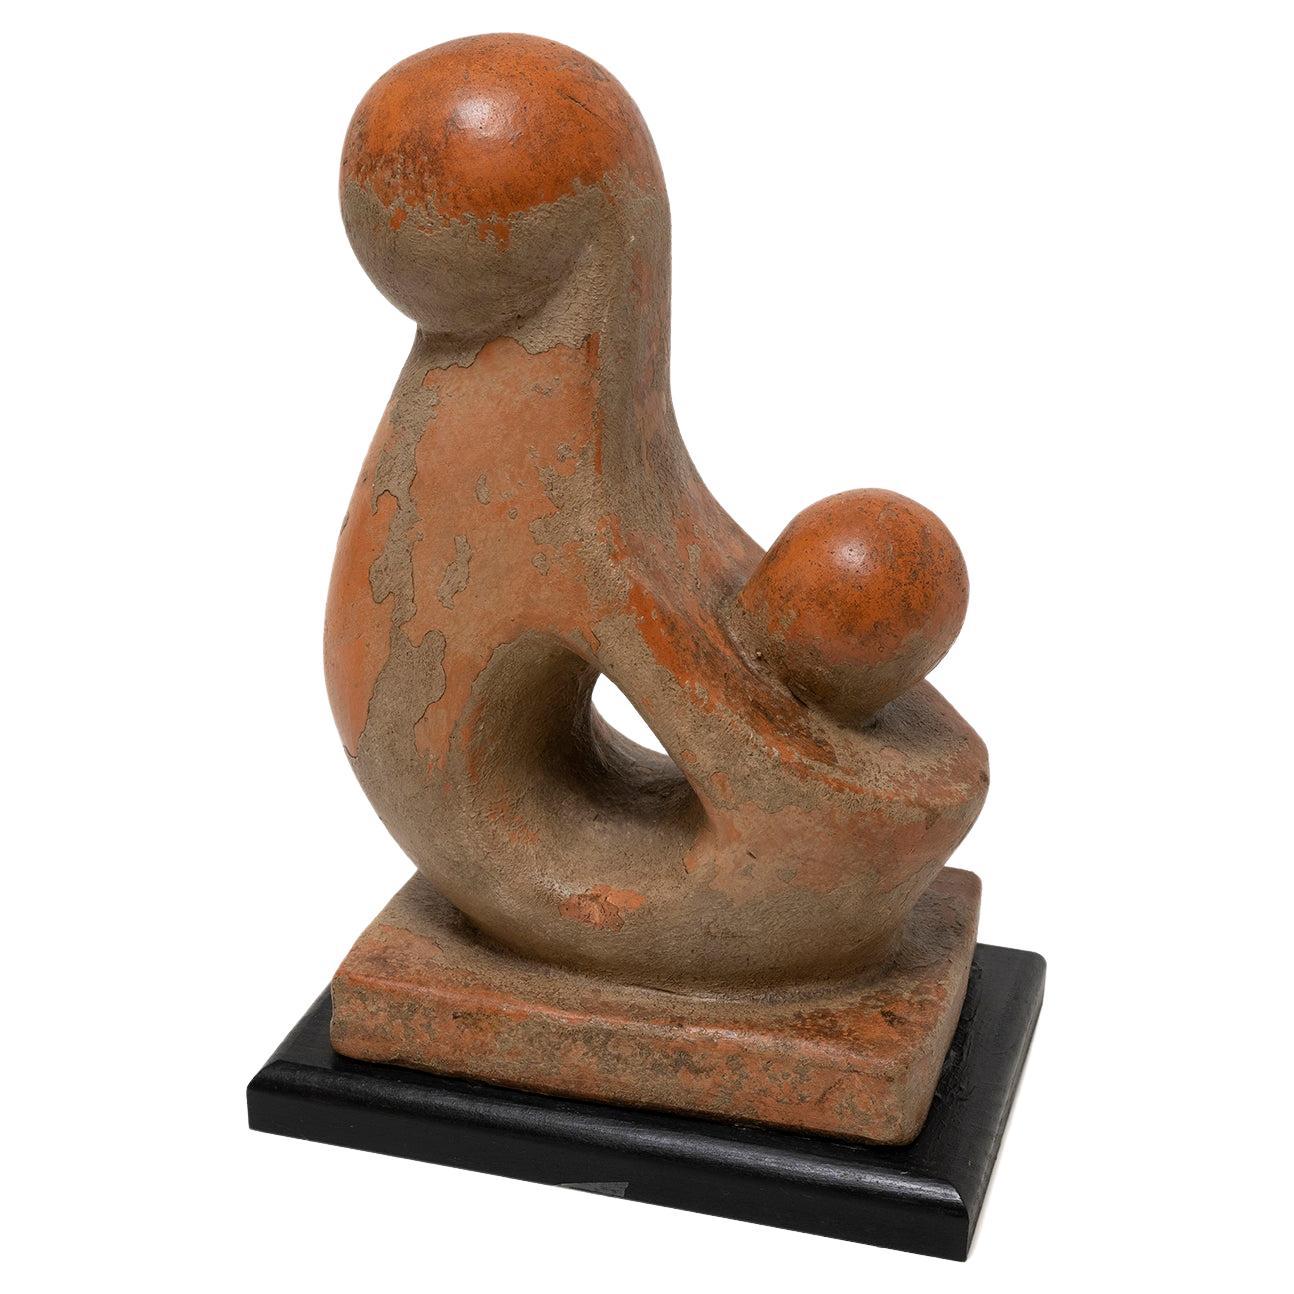 Sculpture Terracotta Stone Mother & Child Biomorphic 39cm 15 1/4“ high